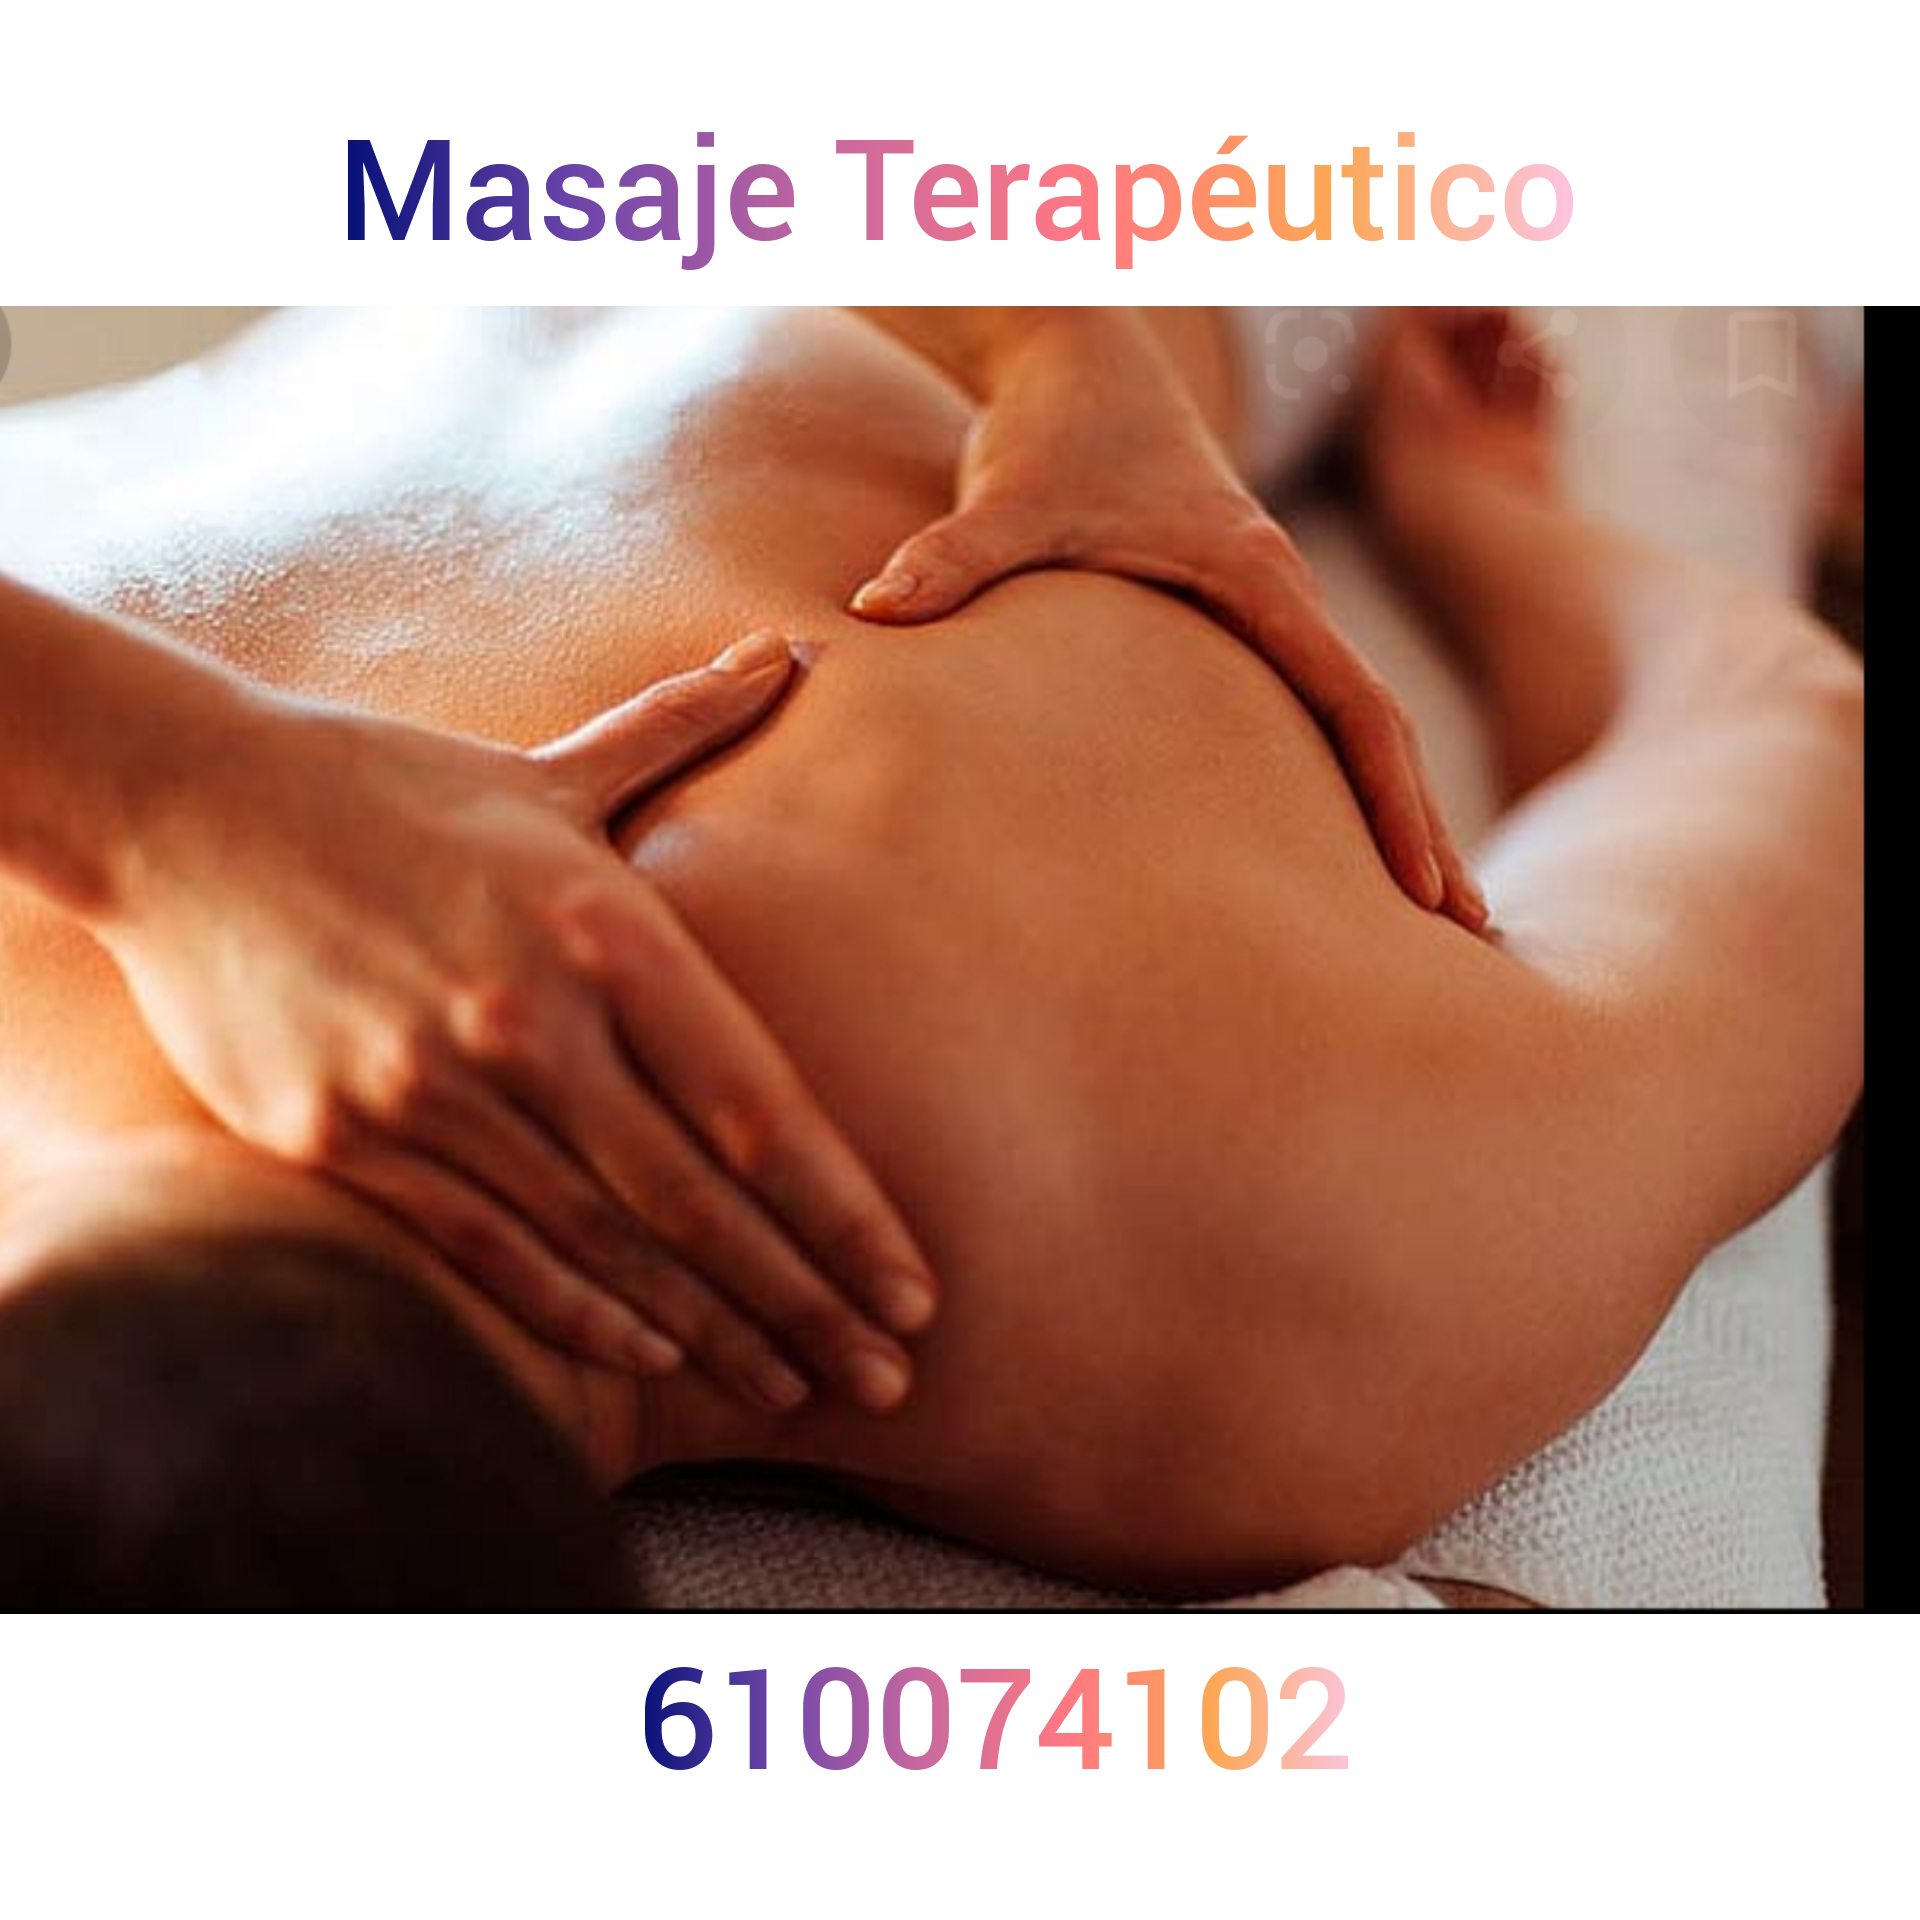 masajistas-terapeuticos madrid Masaje terapéutico Madrid